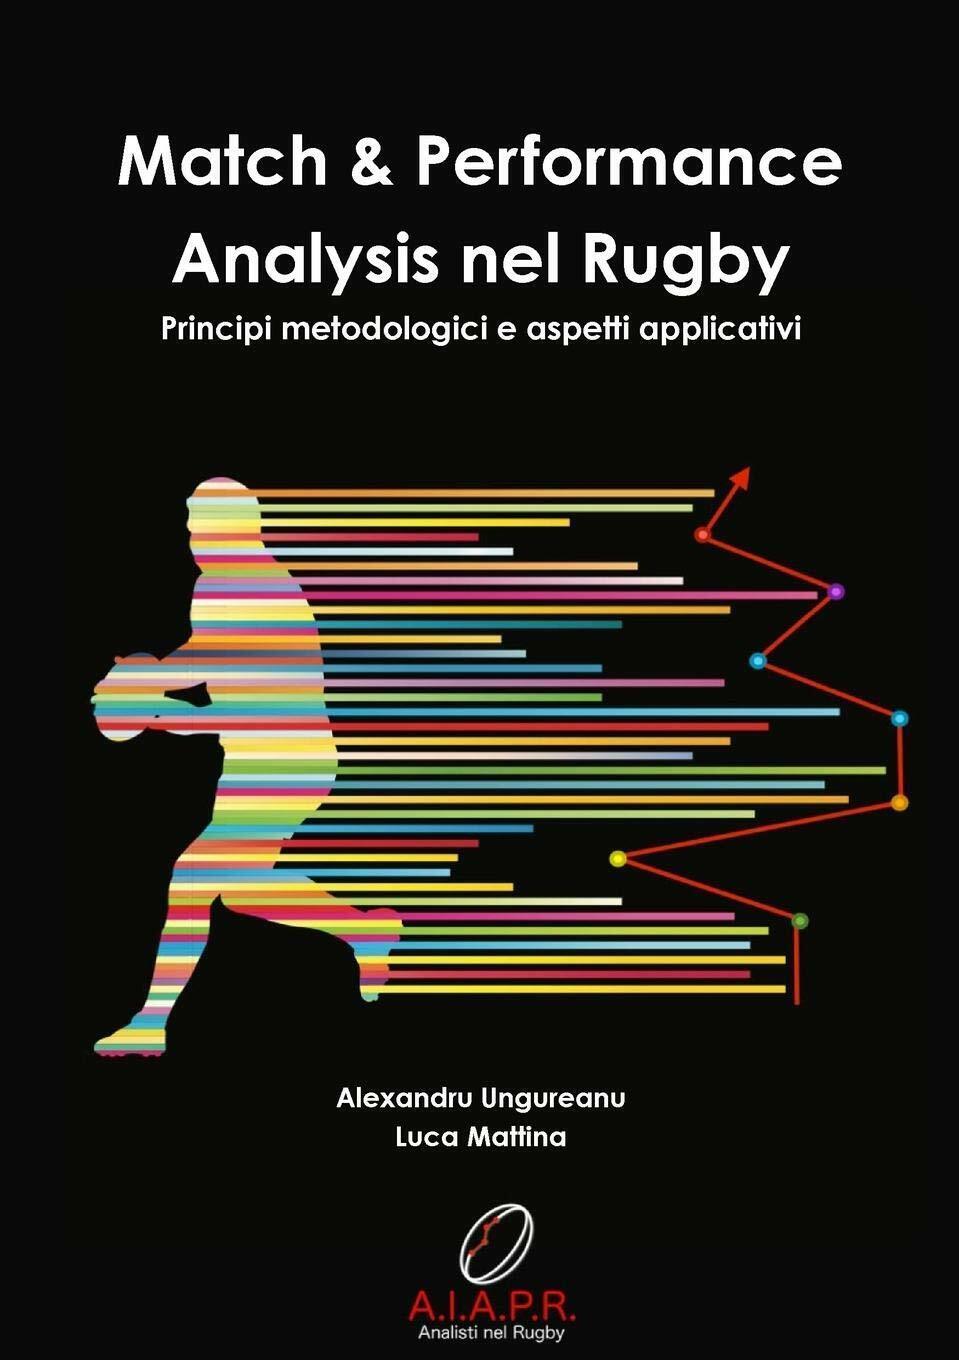 Match & Performance Analysis nel Rugby - Ungureanu, Mattina - Lulu.com, 2017